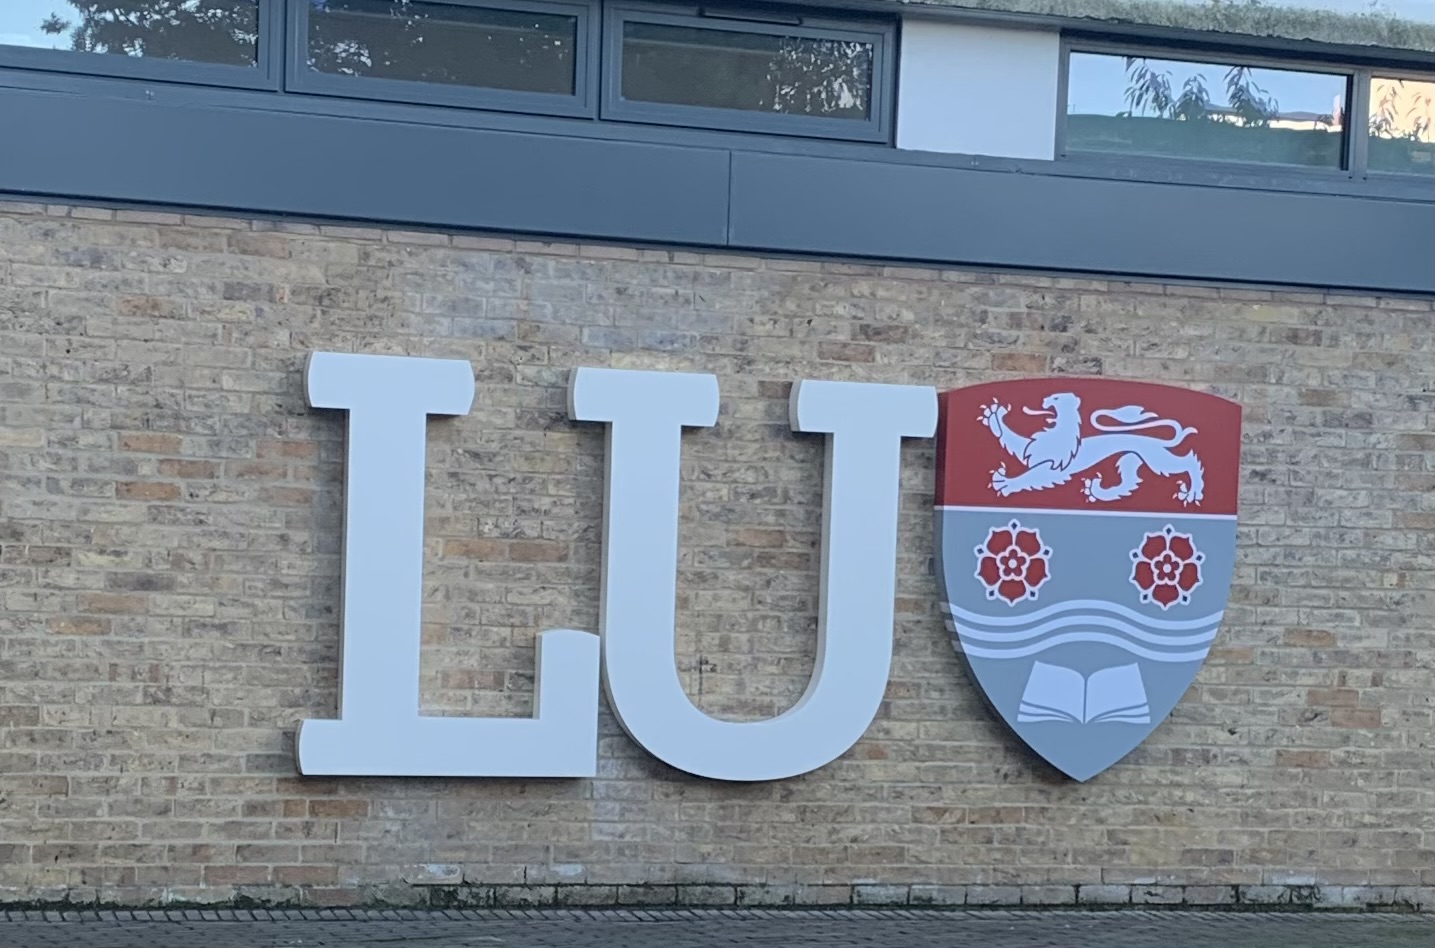 The 'LU' Lancaster University logo sign